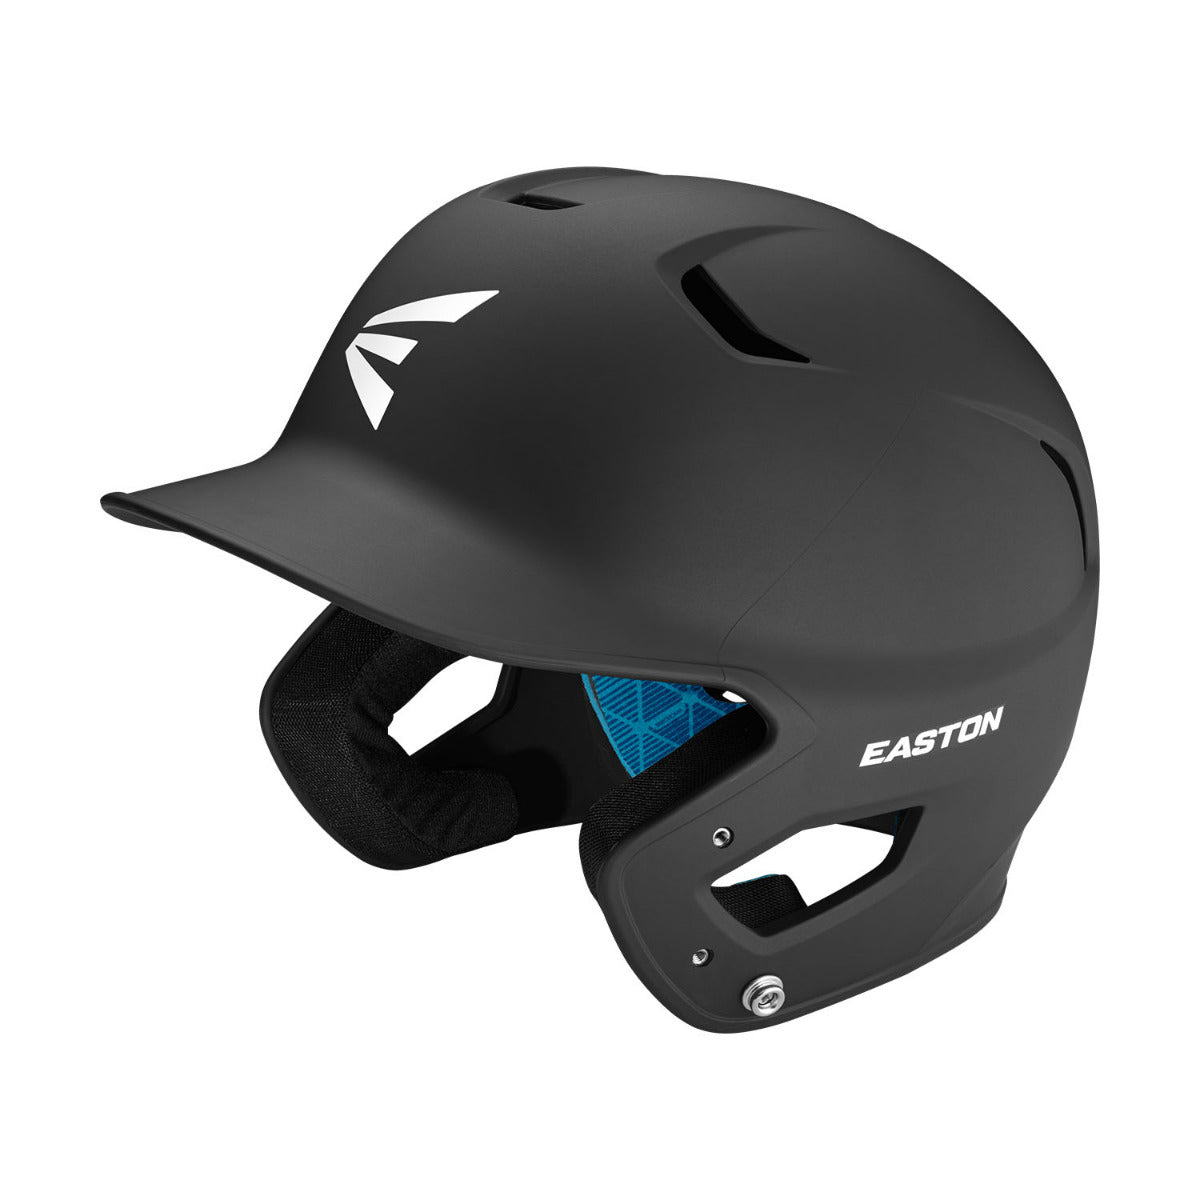 Easton Z5 2.0 Helmet Matte Solid